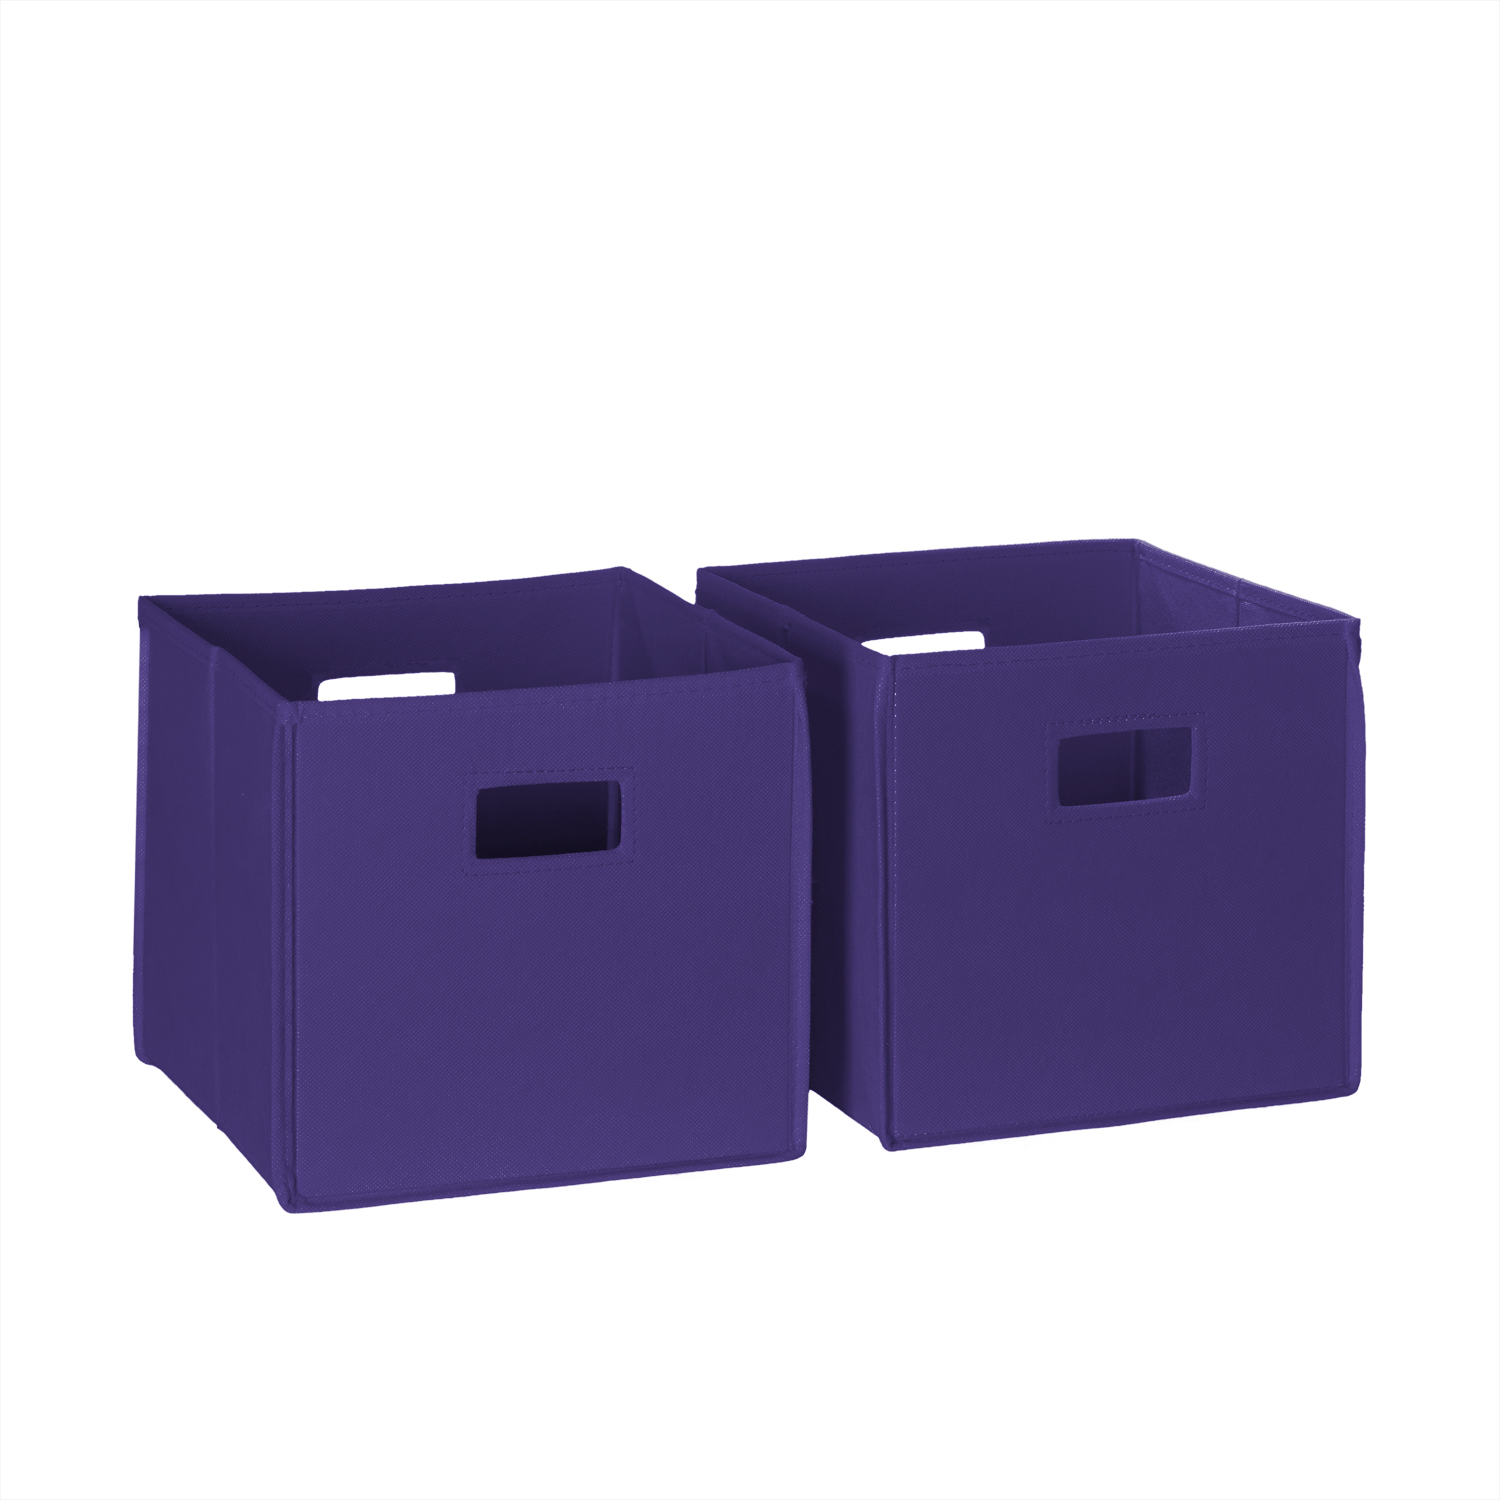 RiverRidge Home Folding Fabric Cube Storage Bin Set of 2 - Dark Purple - image 1 of 8